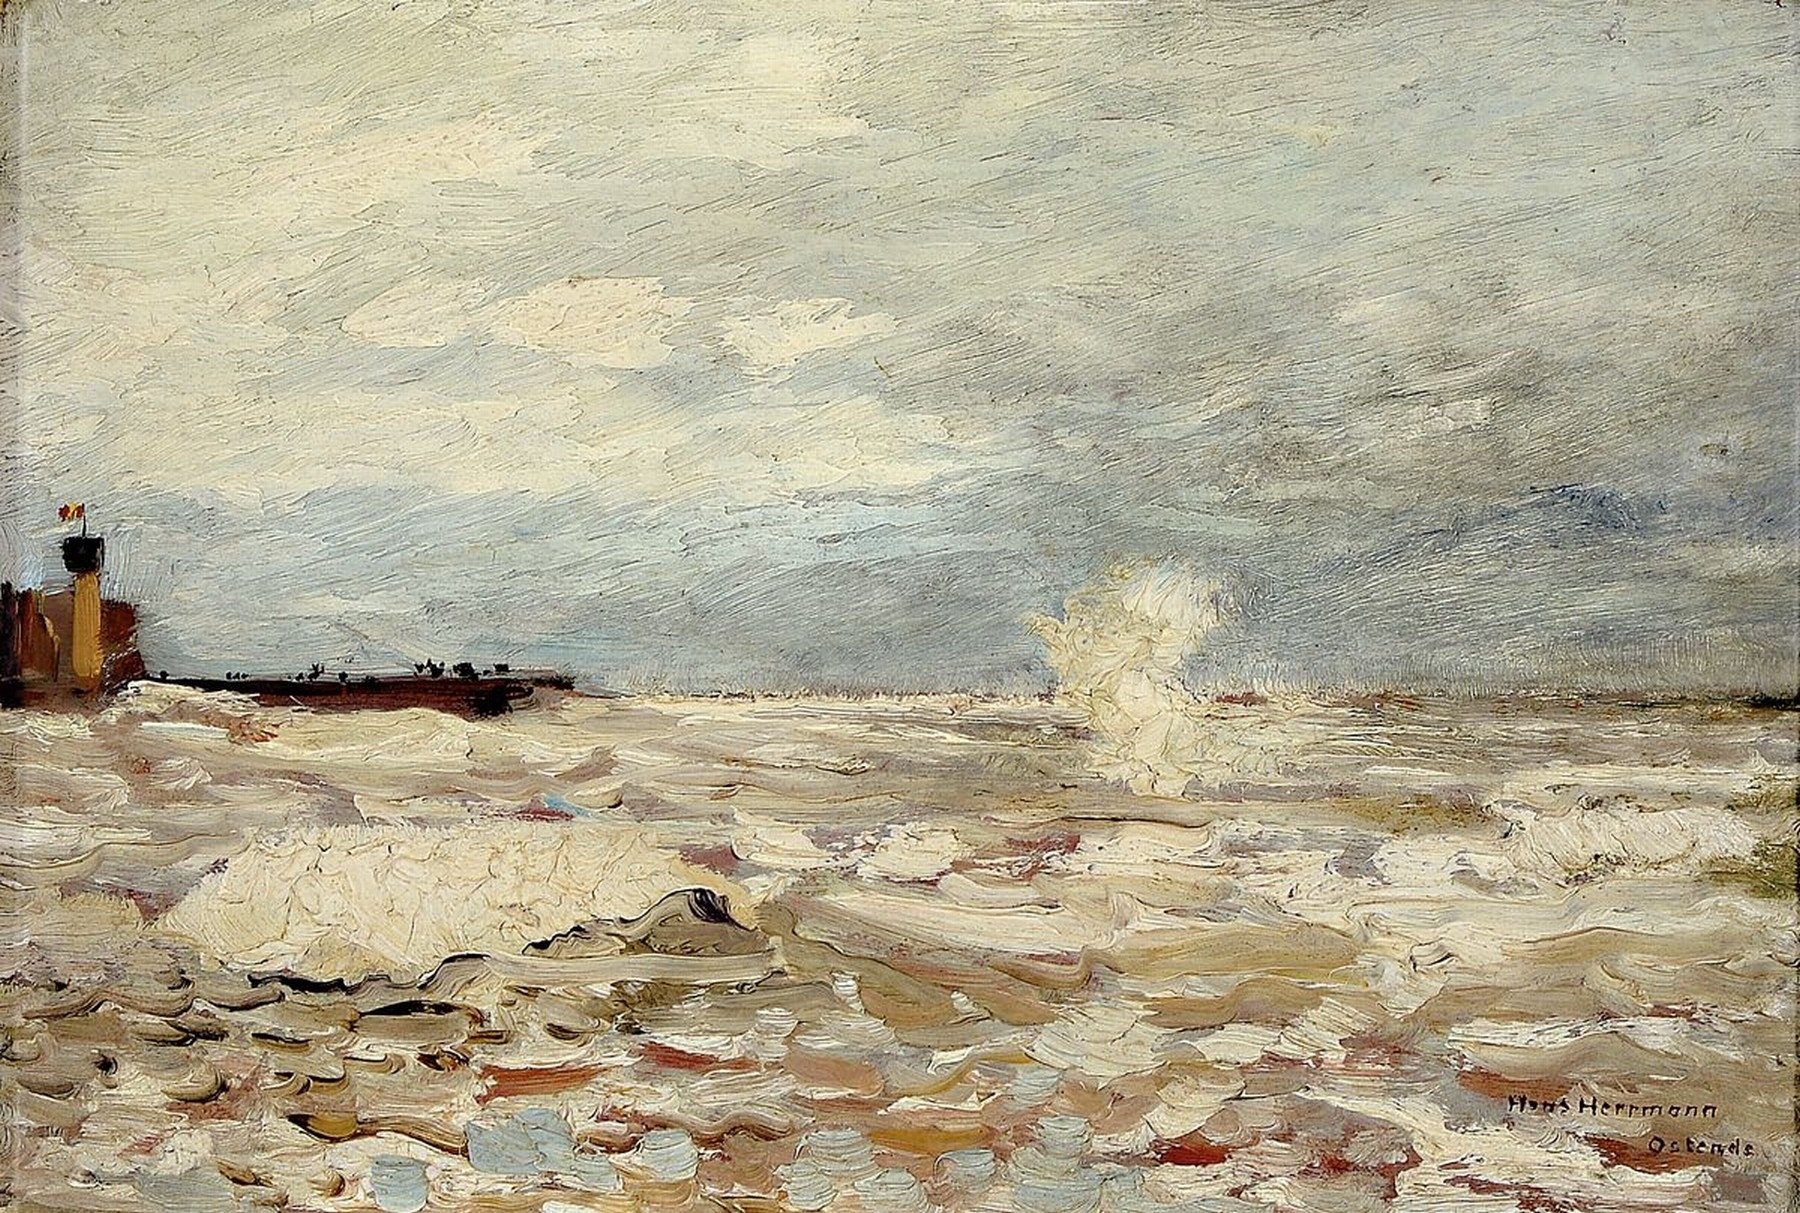 Sturm in Ostend by Hans Hermann, 1887